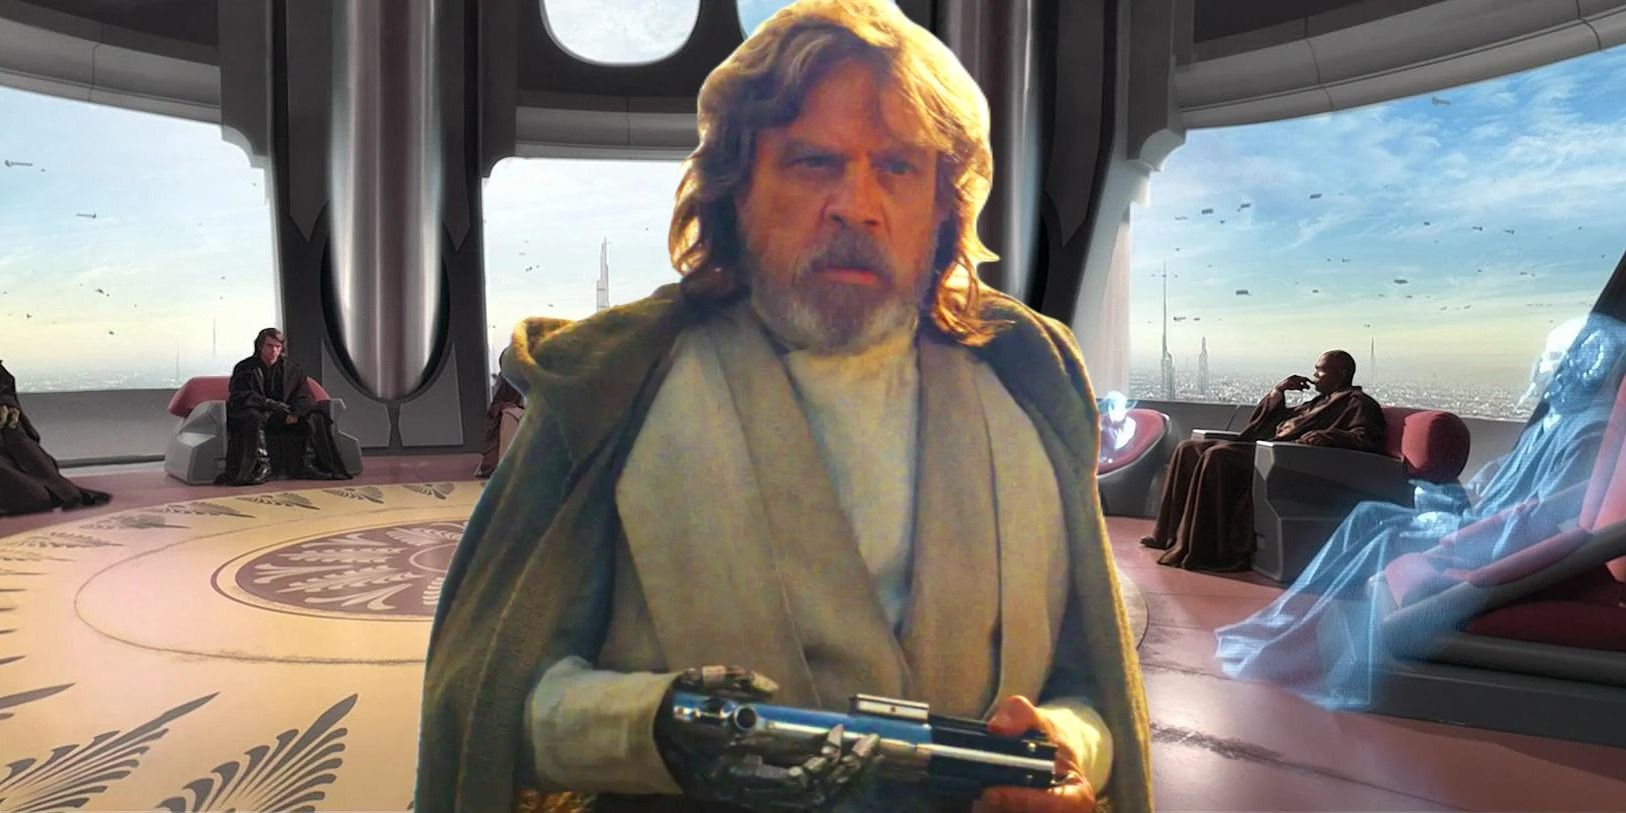 Luke with Jedi Council